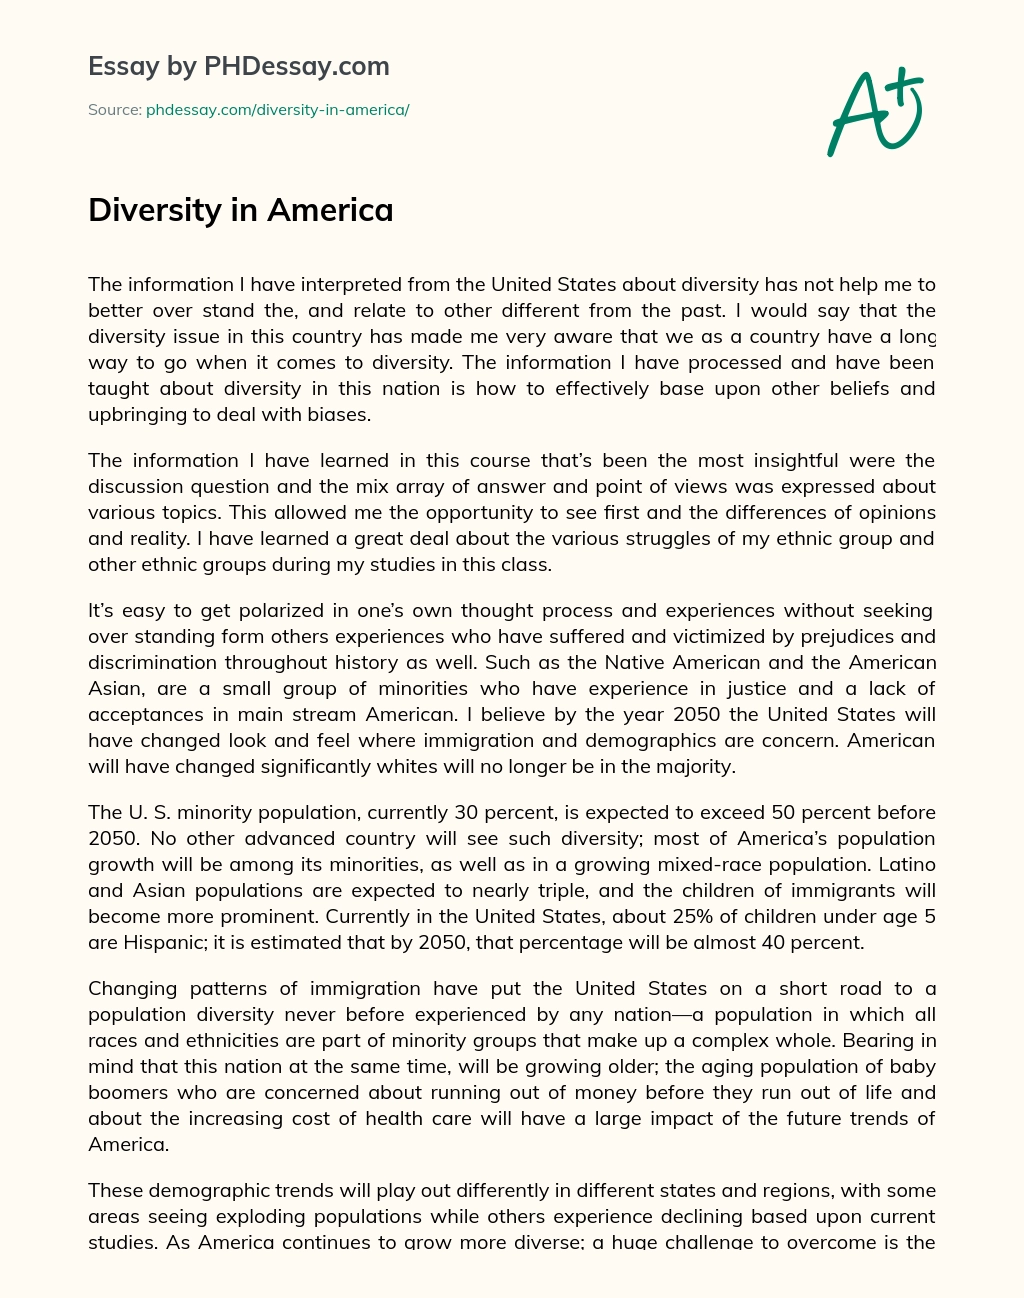 Diversity in America essay